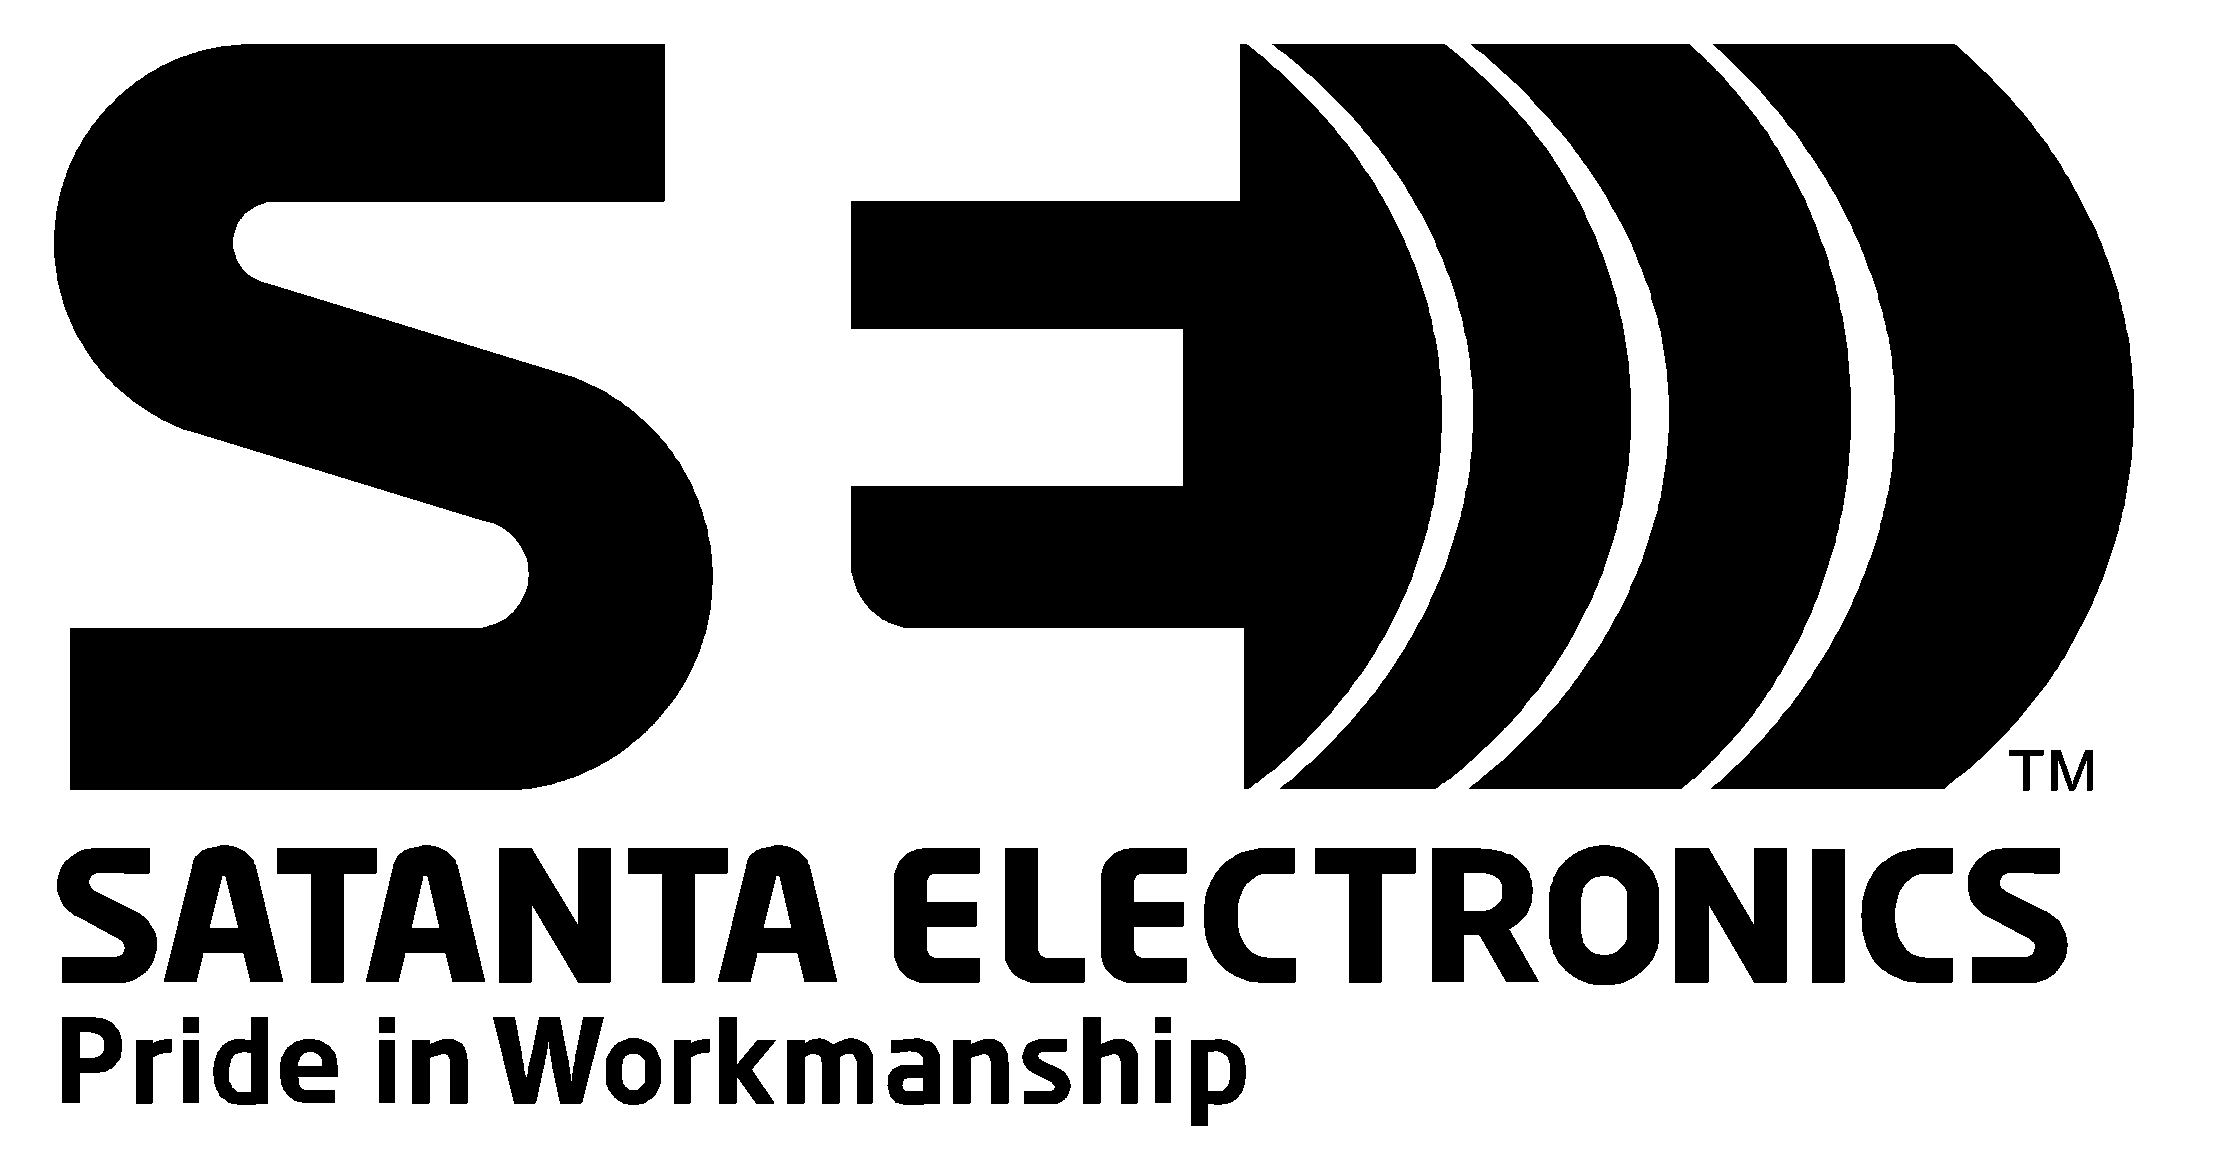 Satanta Electronics logo